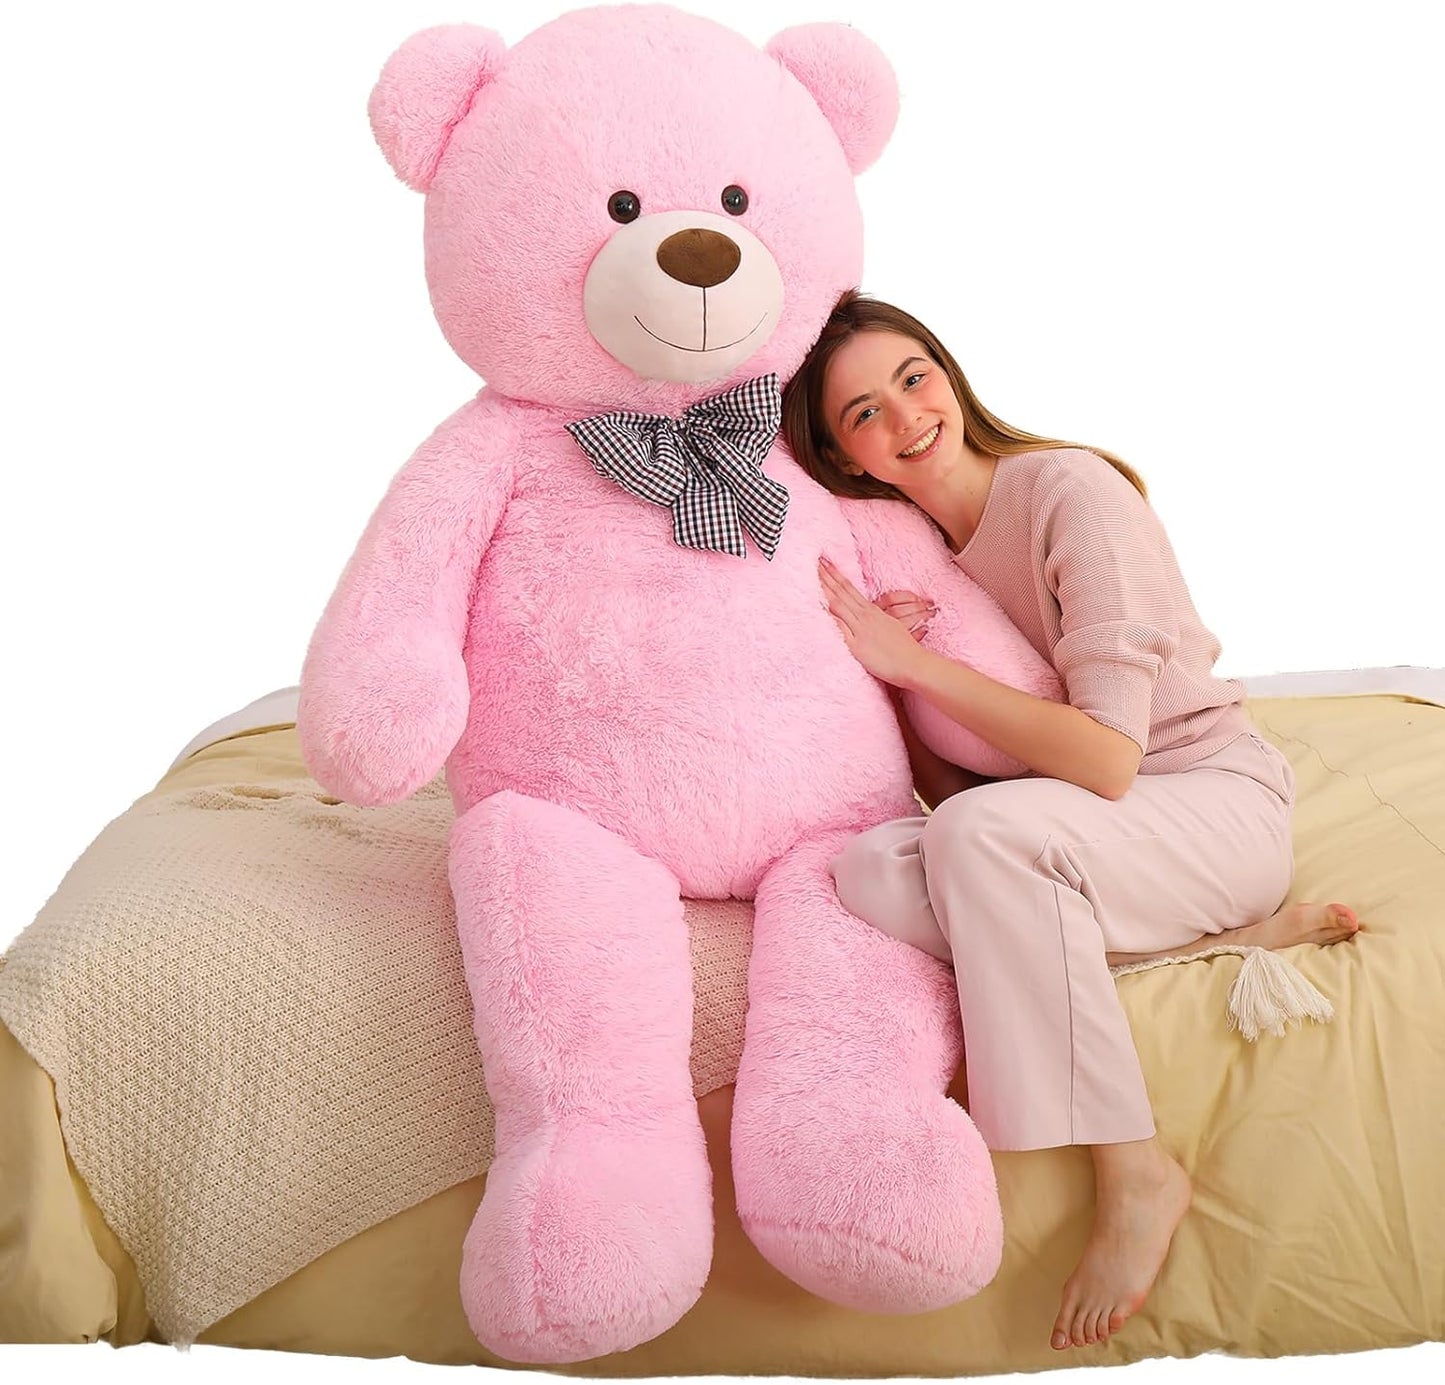 Life Size Teddy Bear Plush Toy, Pink, 6 FT - MorisMos Stuffed Animals